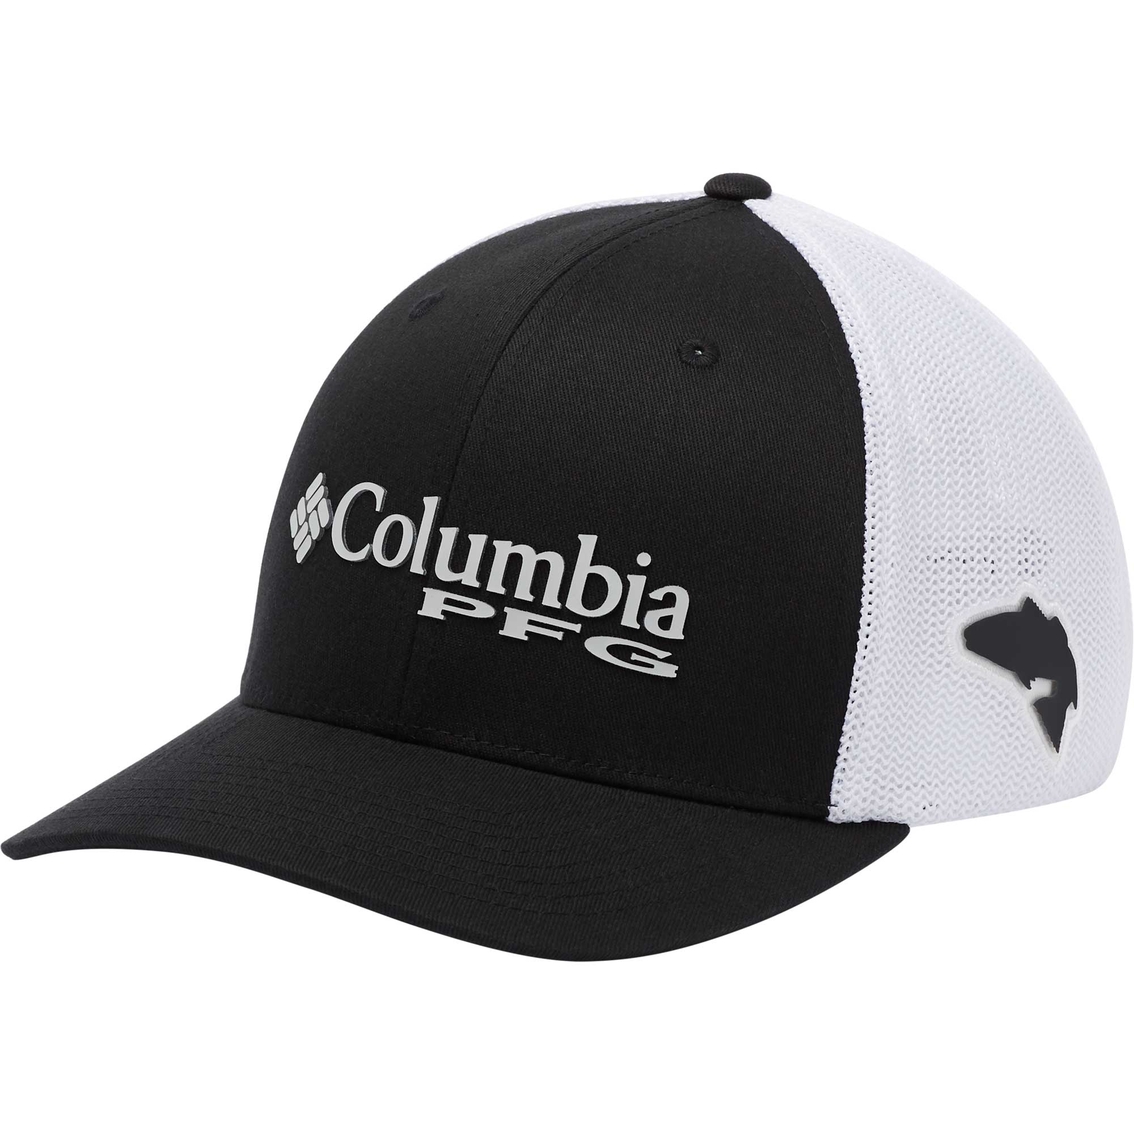 Columbia Performance Fishing Gear (pfg) Mesh Ball Cap, Hats & Visors, Clothing & Accessories